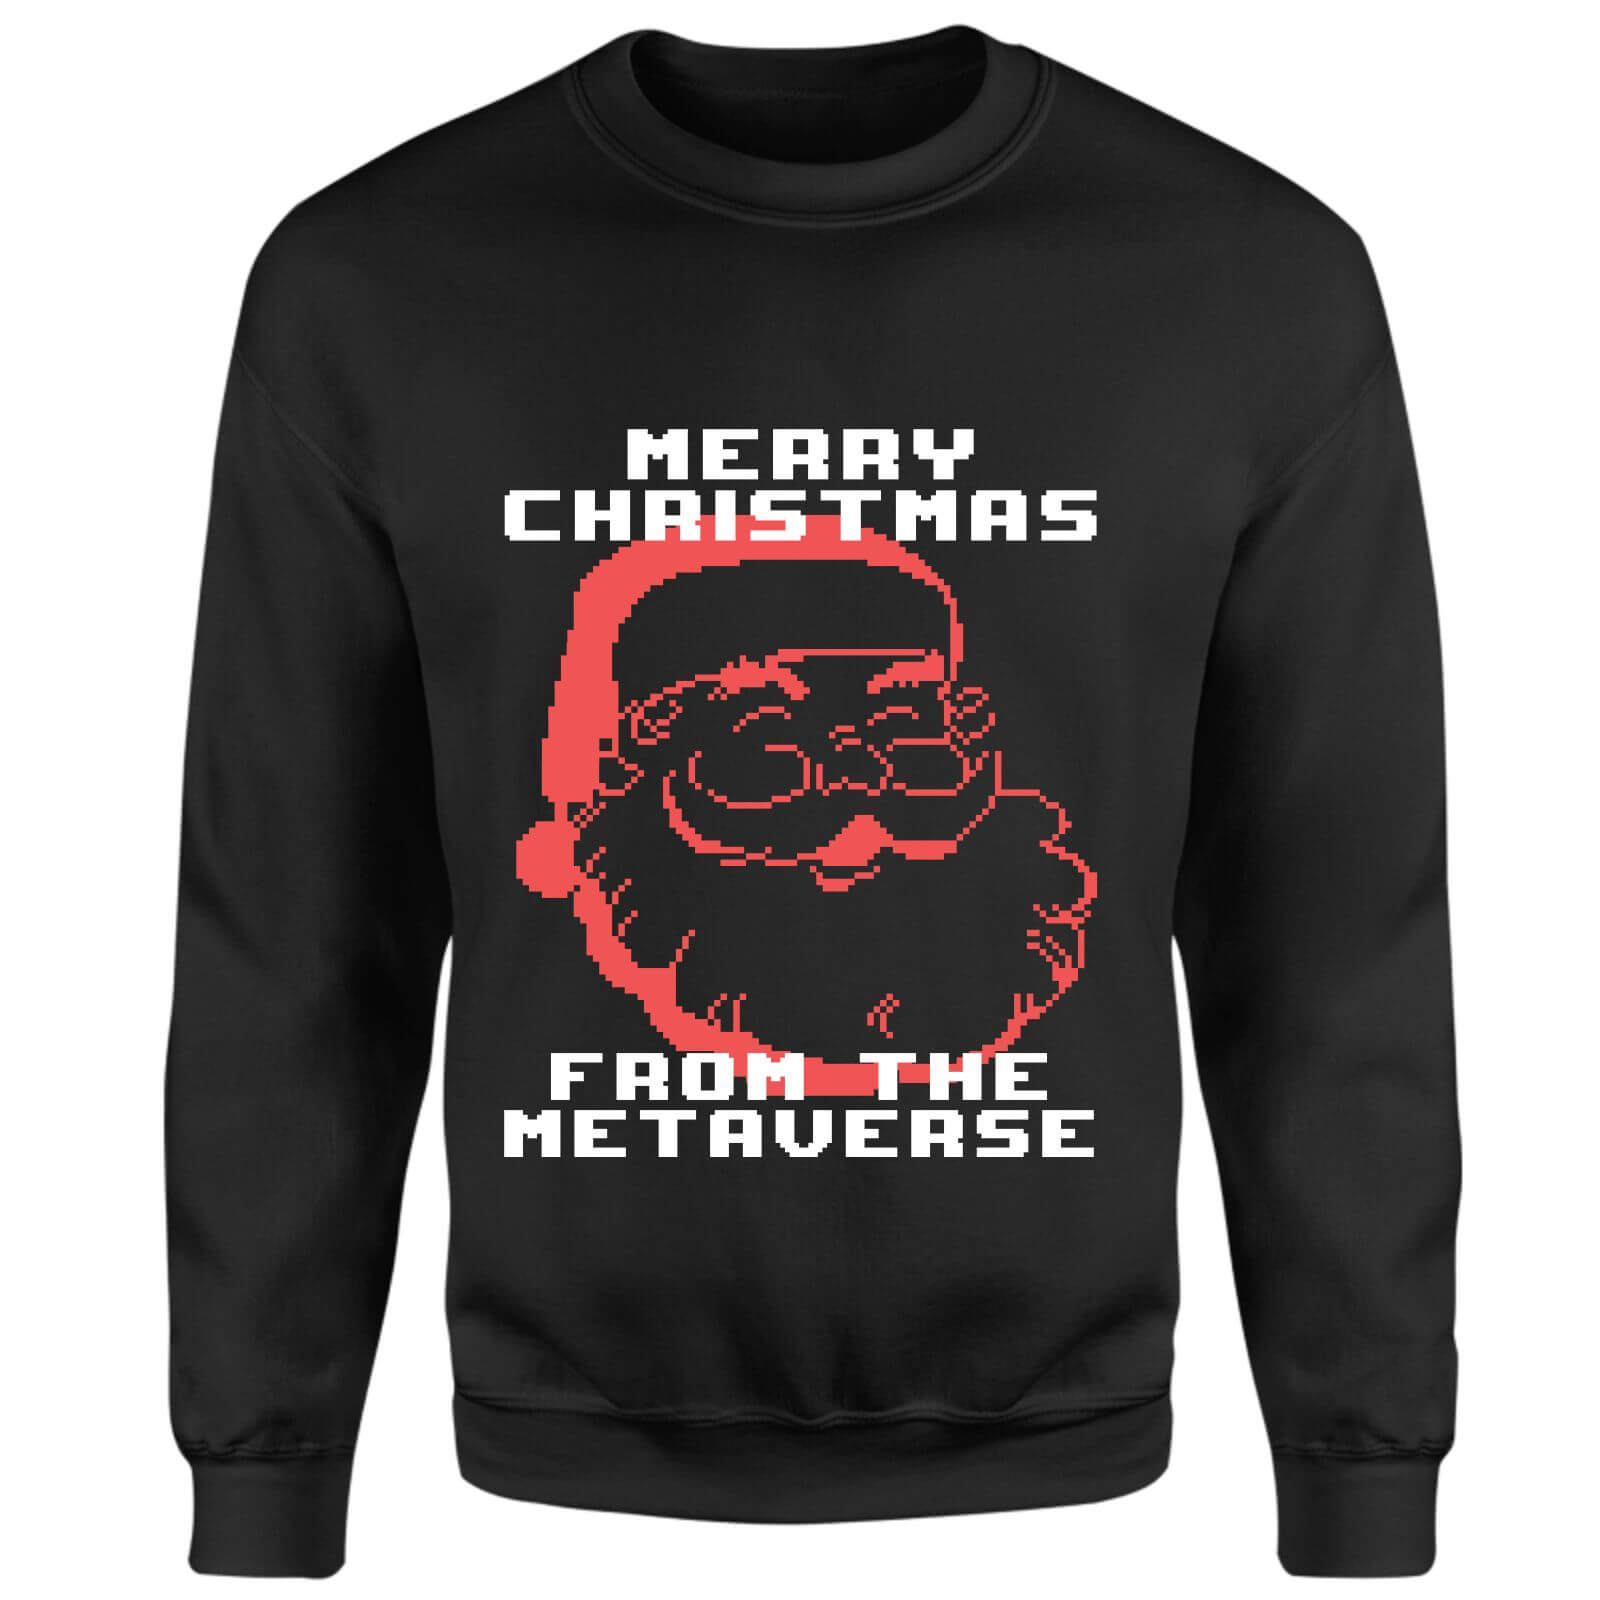 Merry Christmas From The Metaverse Sweatshirt - Black - S - Black